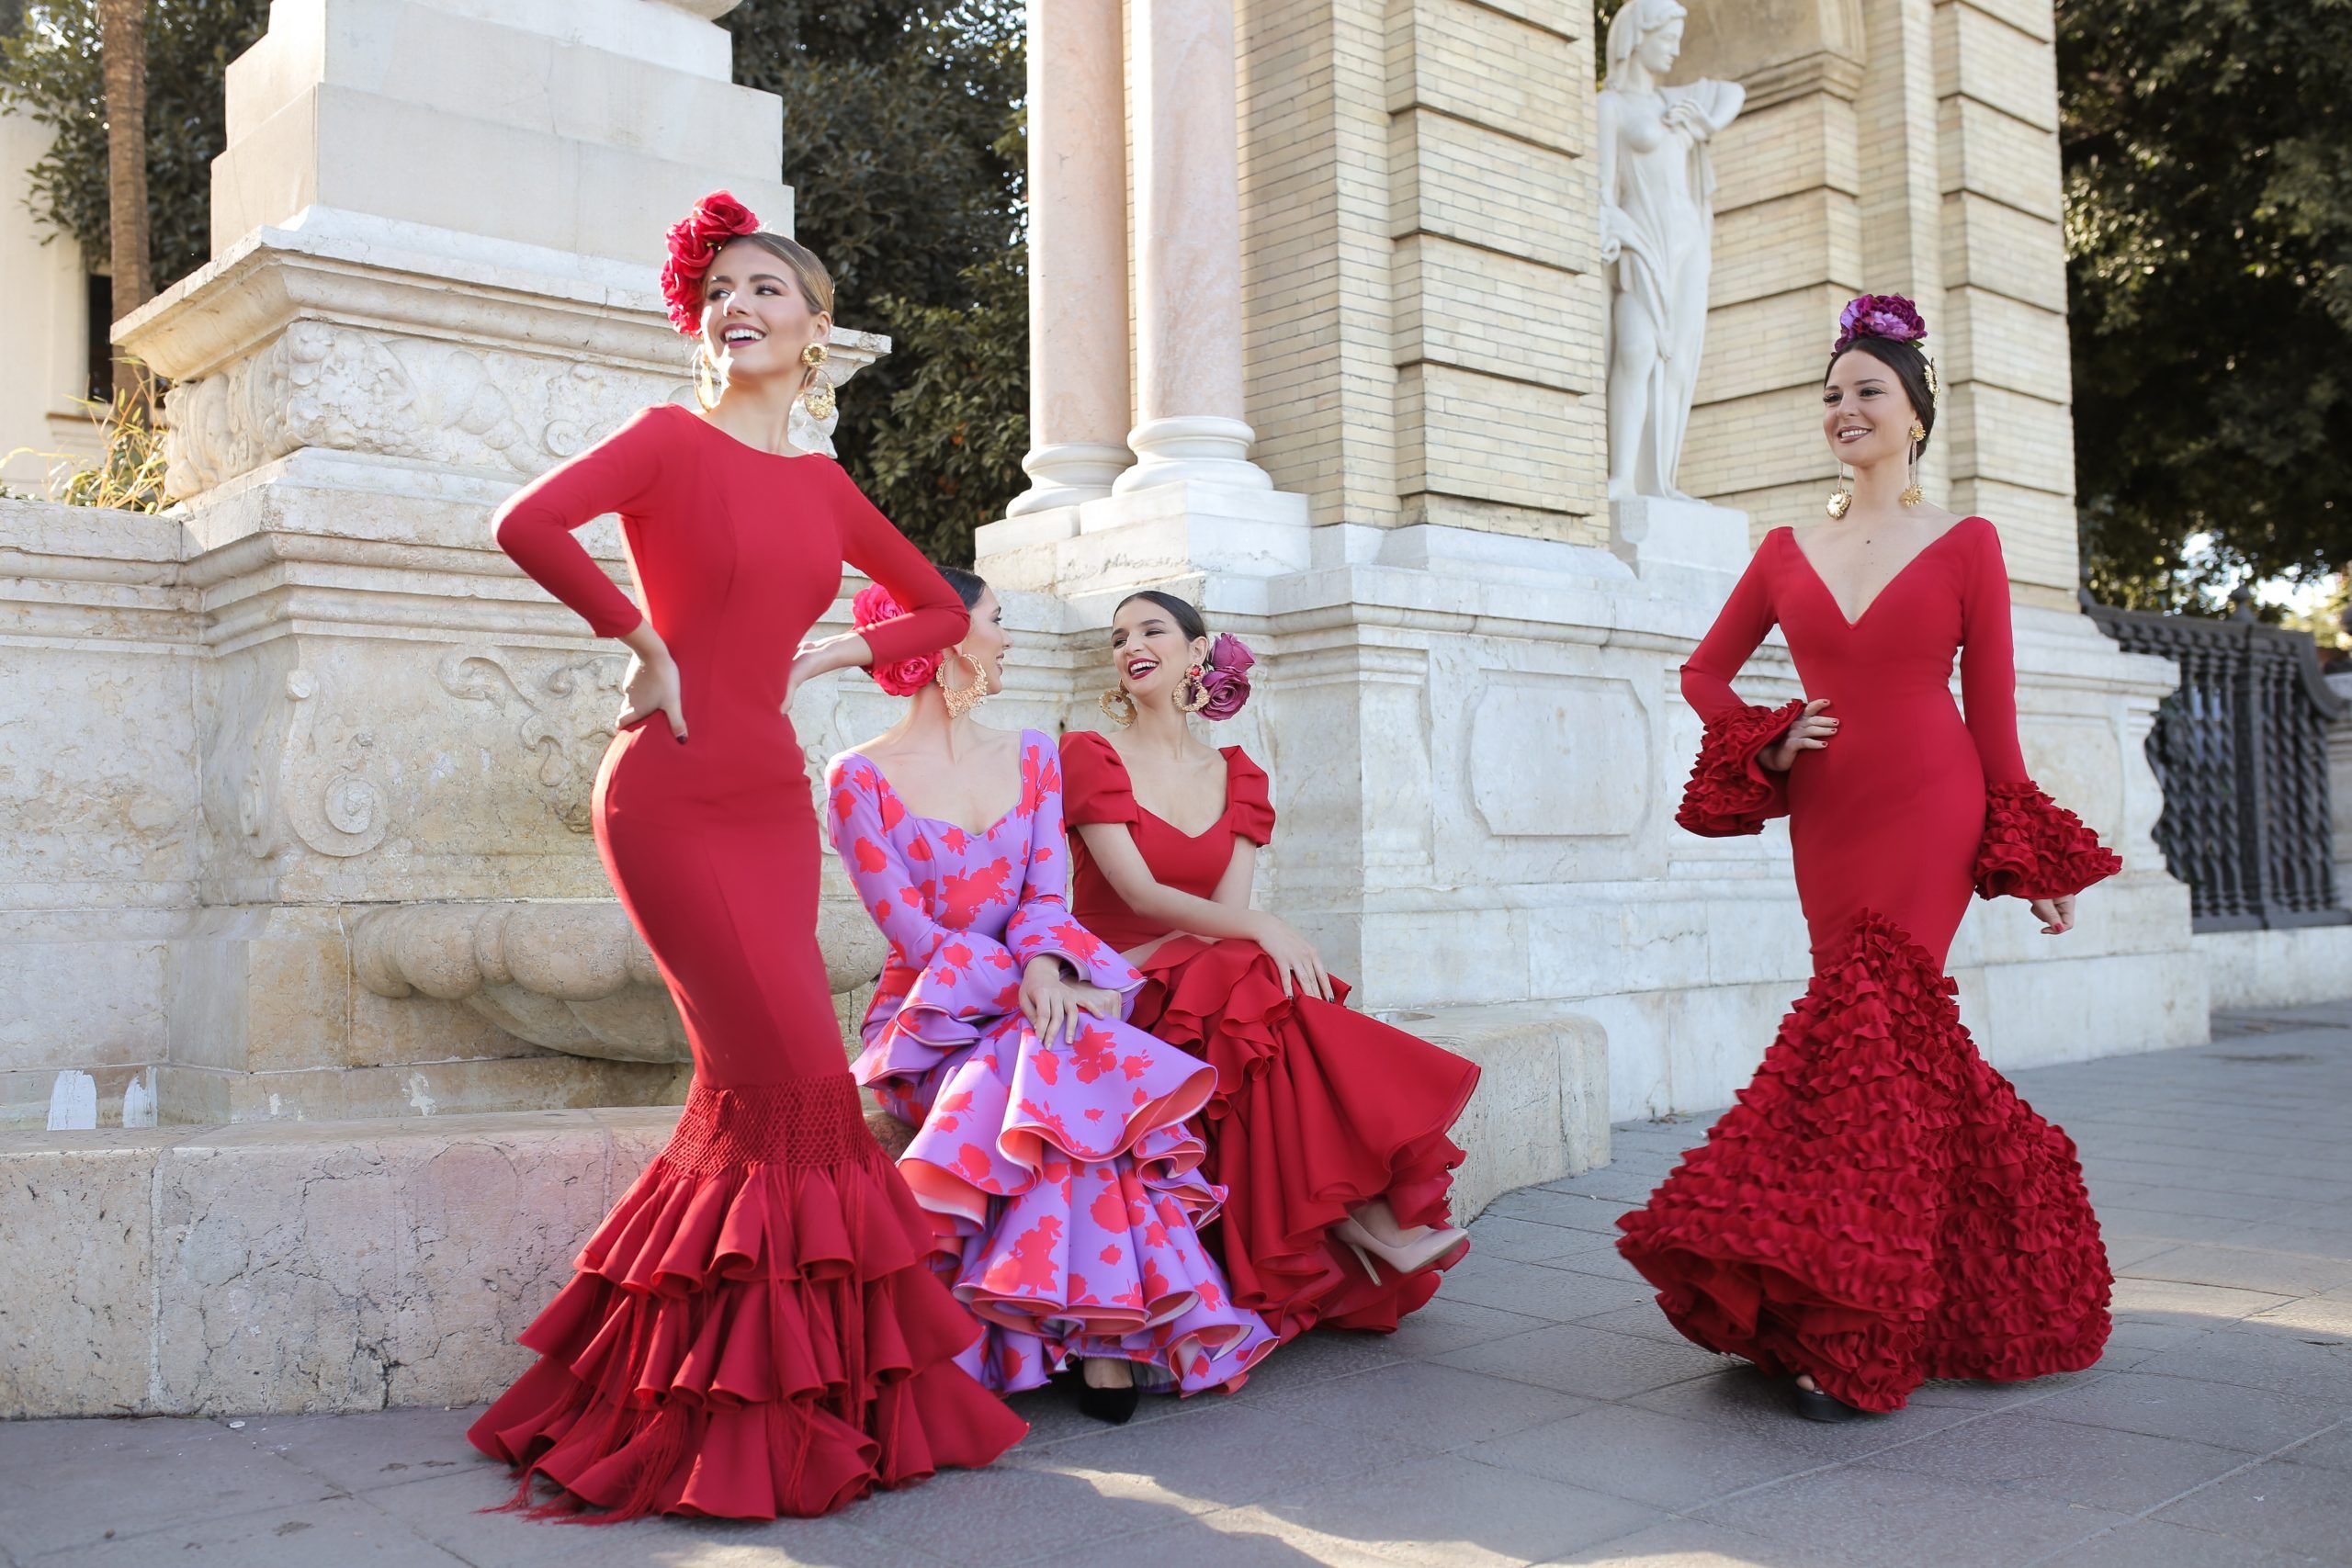 Espinas Grafico Numérico Moda Flamenca Made In Gato por Liebre. - CayeCruz